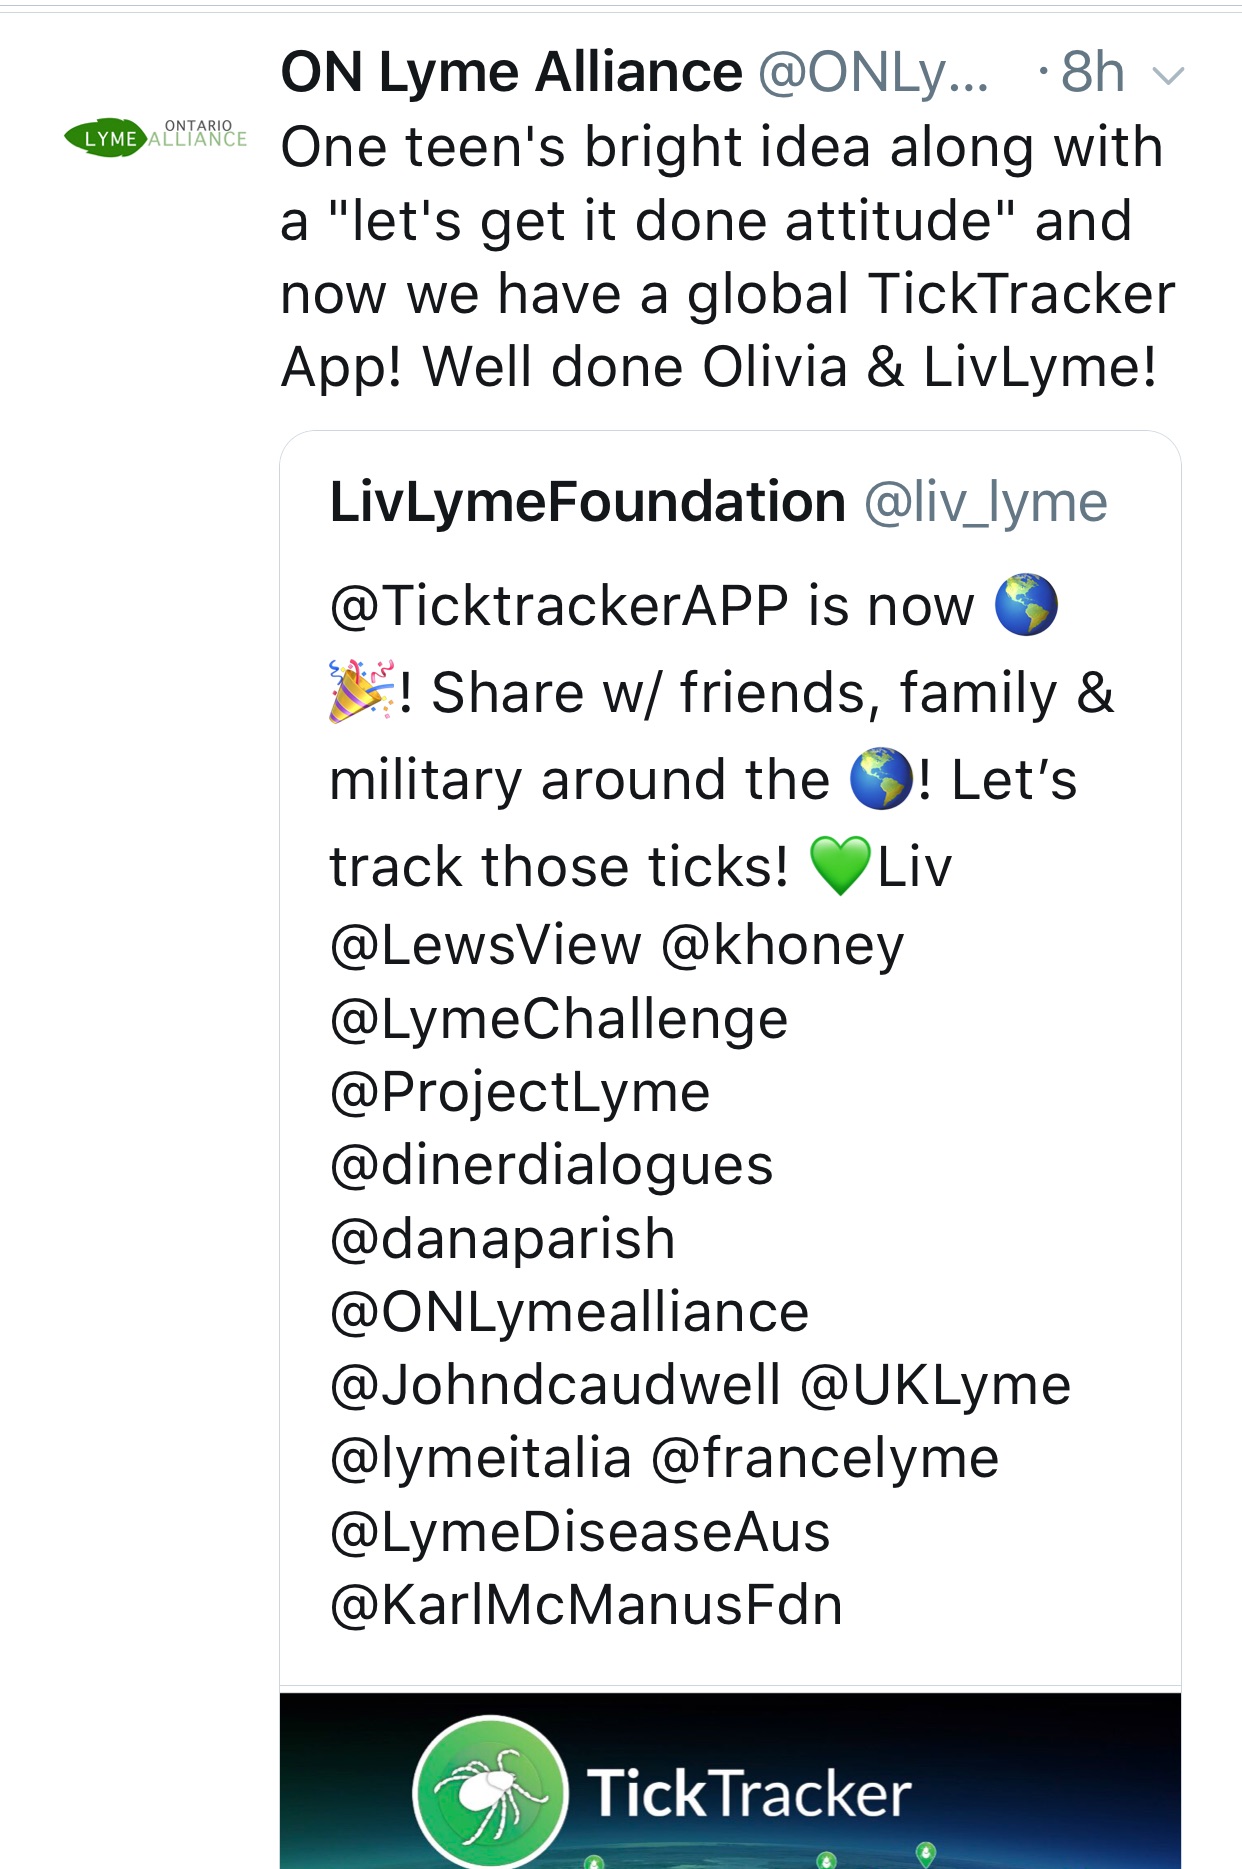 TickTracker_Ontario-Lyme-Alliance-Tweet_LivLymeFoundation